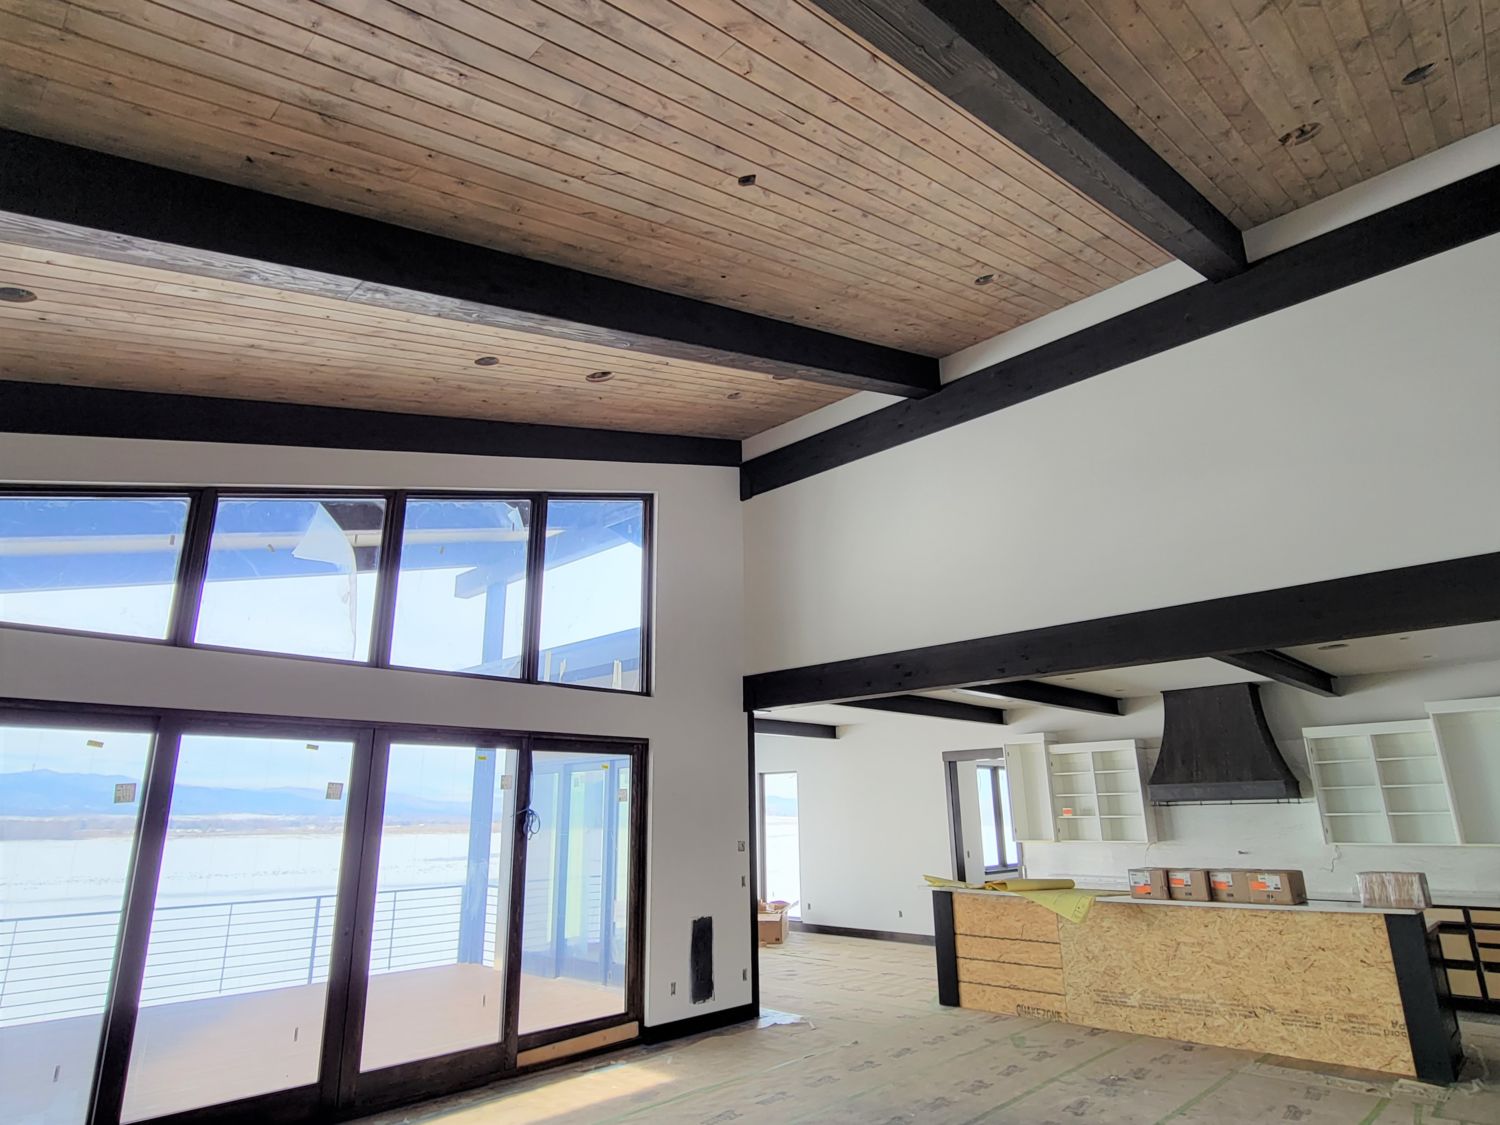 custom-home-builder-tongue-and-groove-ceiling-beams-progress-windows